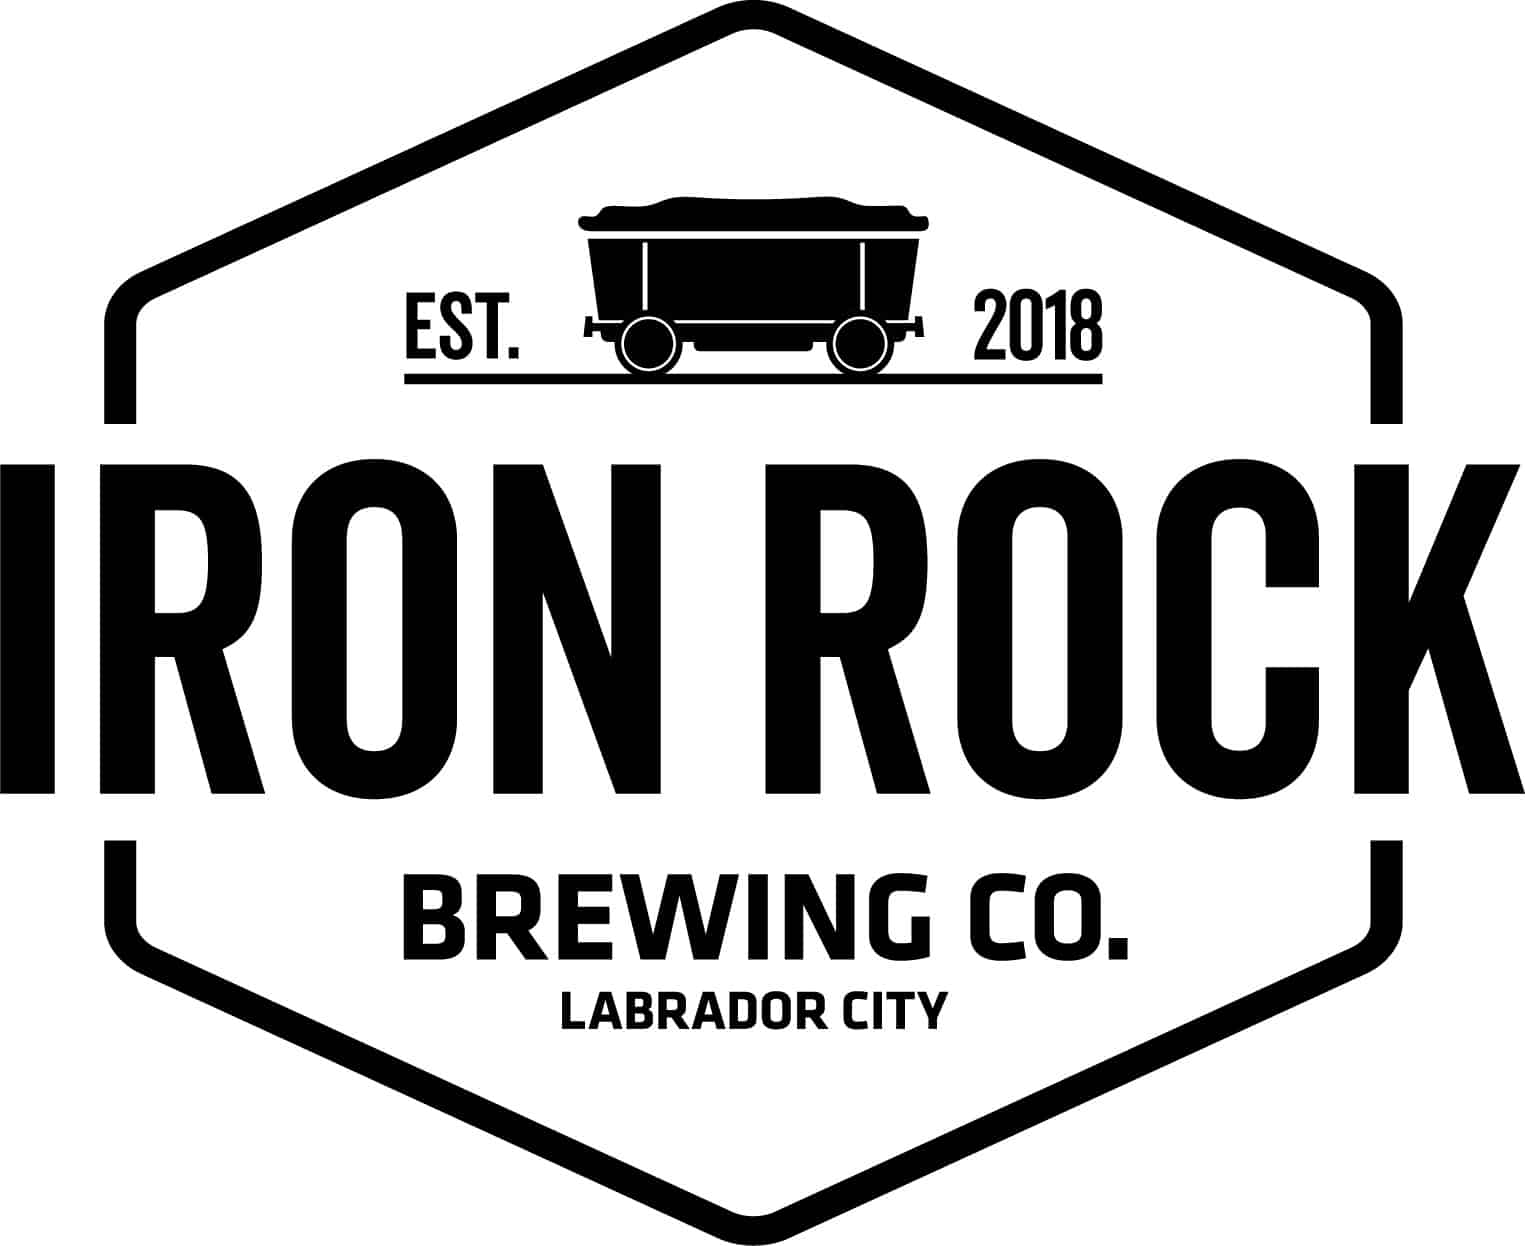 Ironrock Brewing Co.